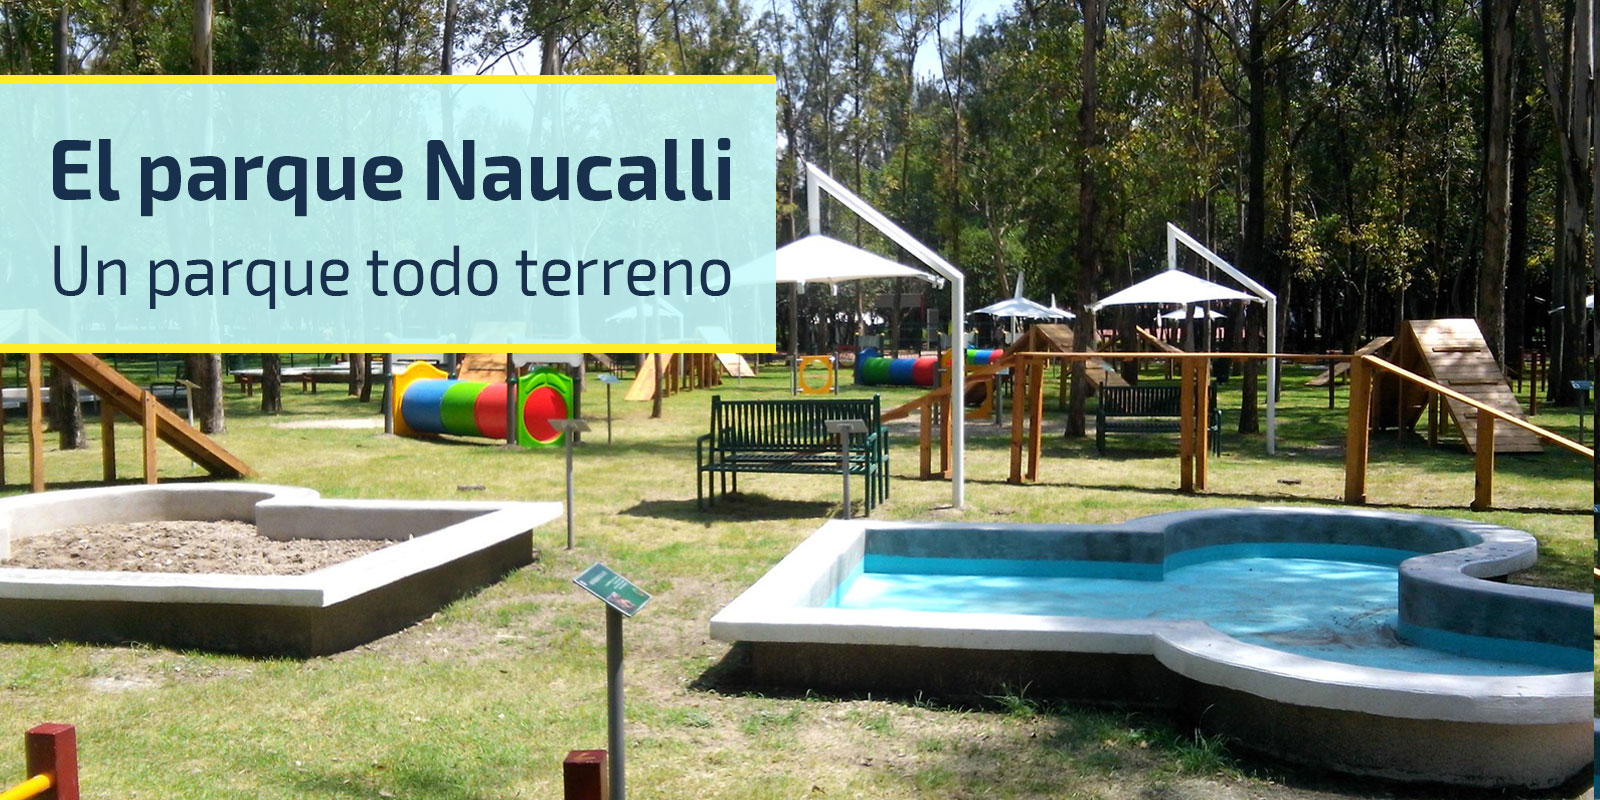 Parque Naucalli, Un parque todo terreno, entre torres - CaminanBlog